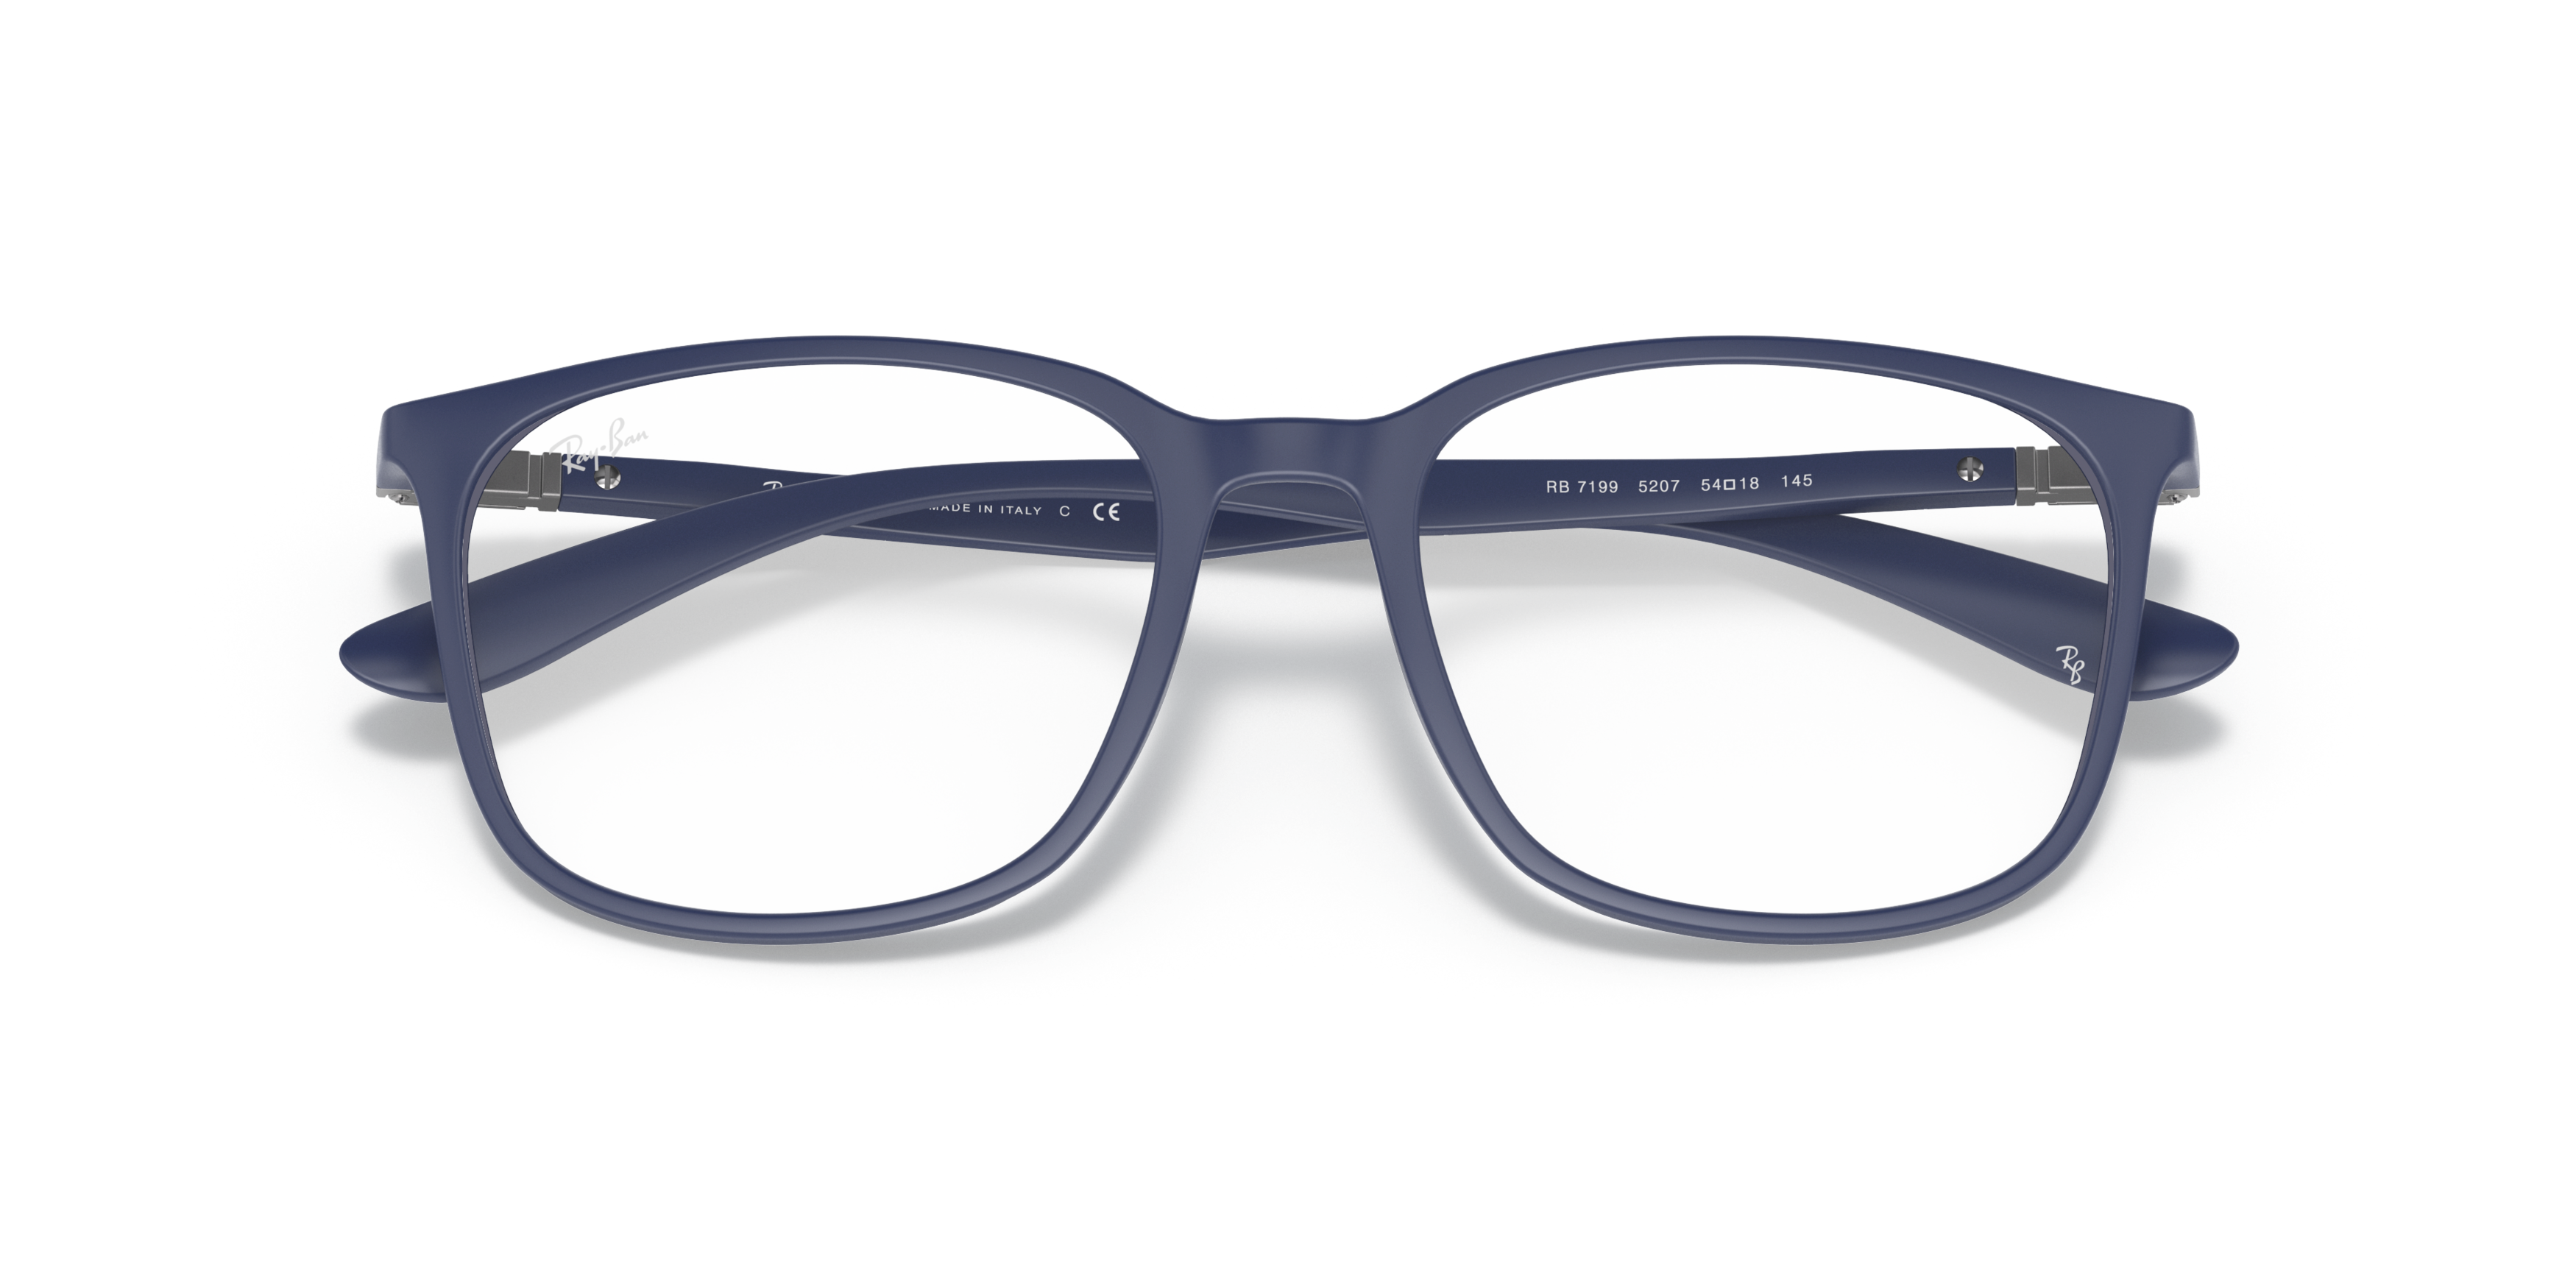 Folded Ray-Ban RX 7199 (5207) Glasses Transparent / Blue